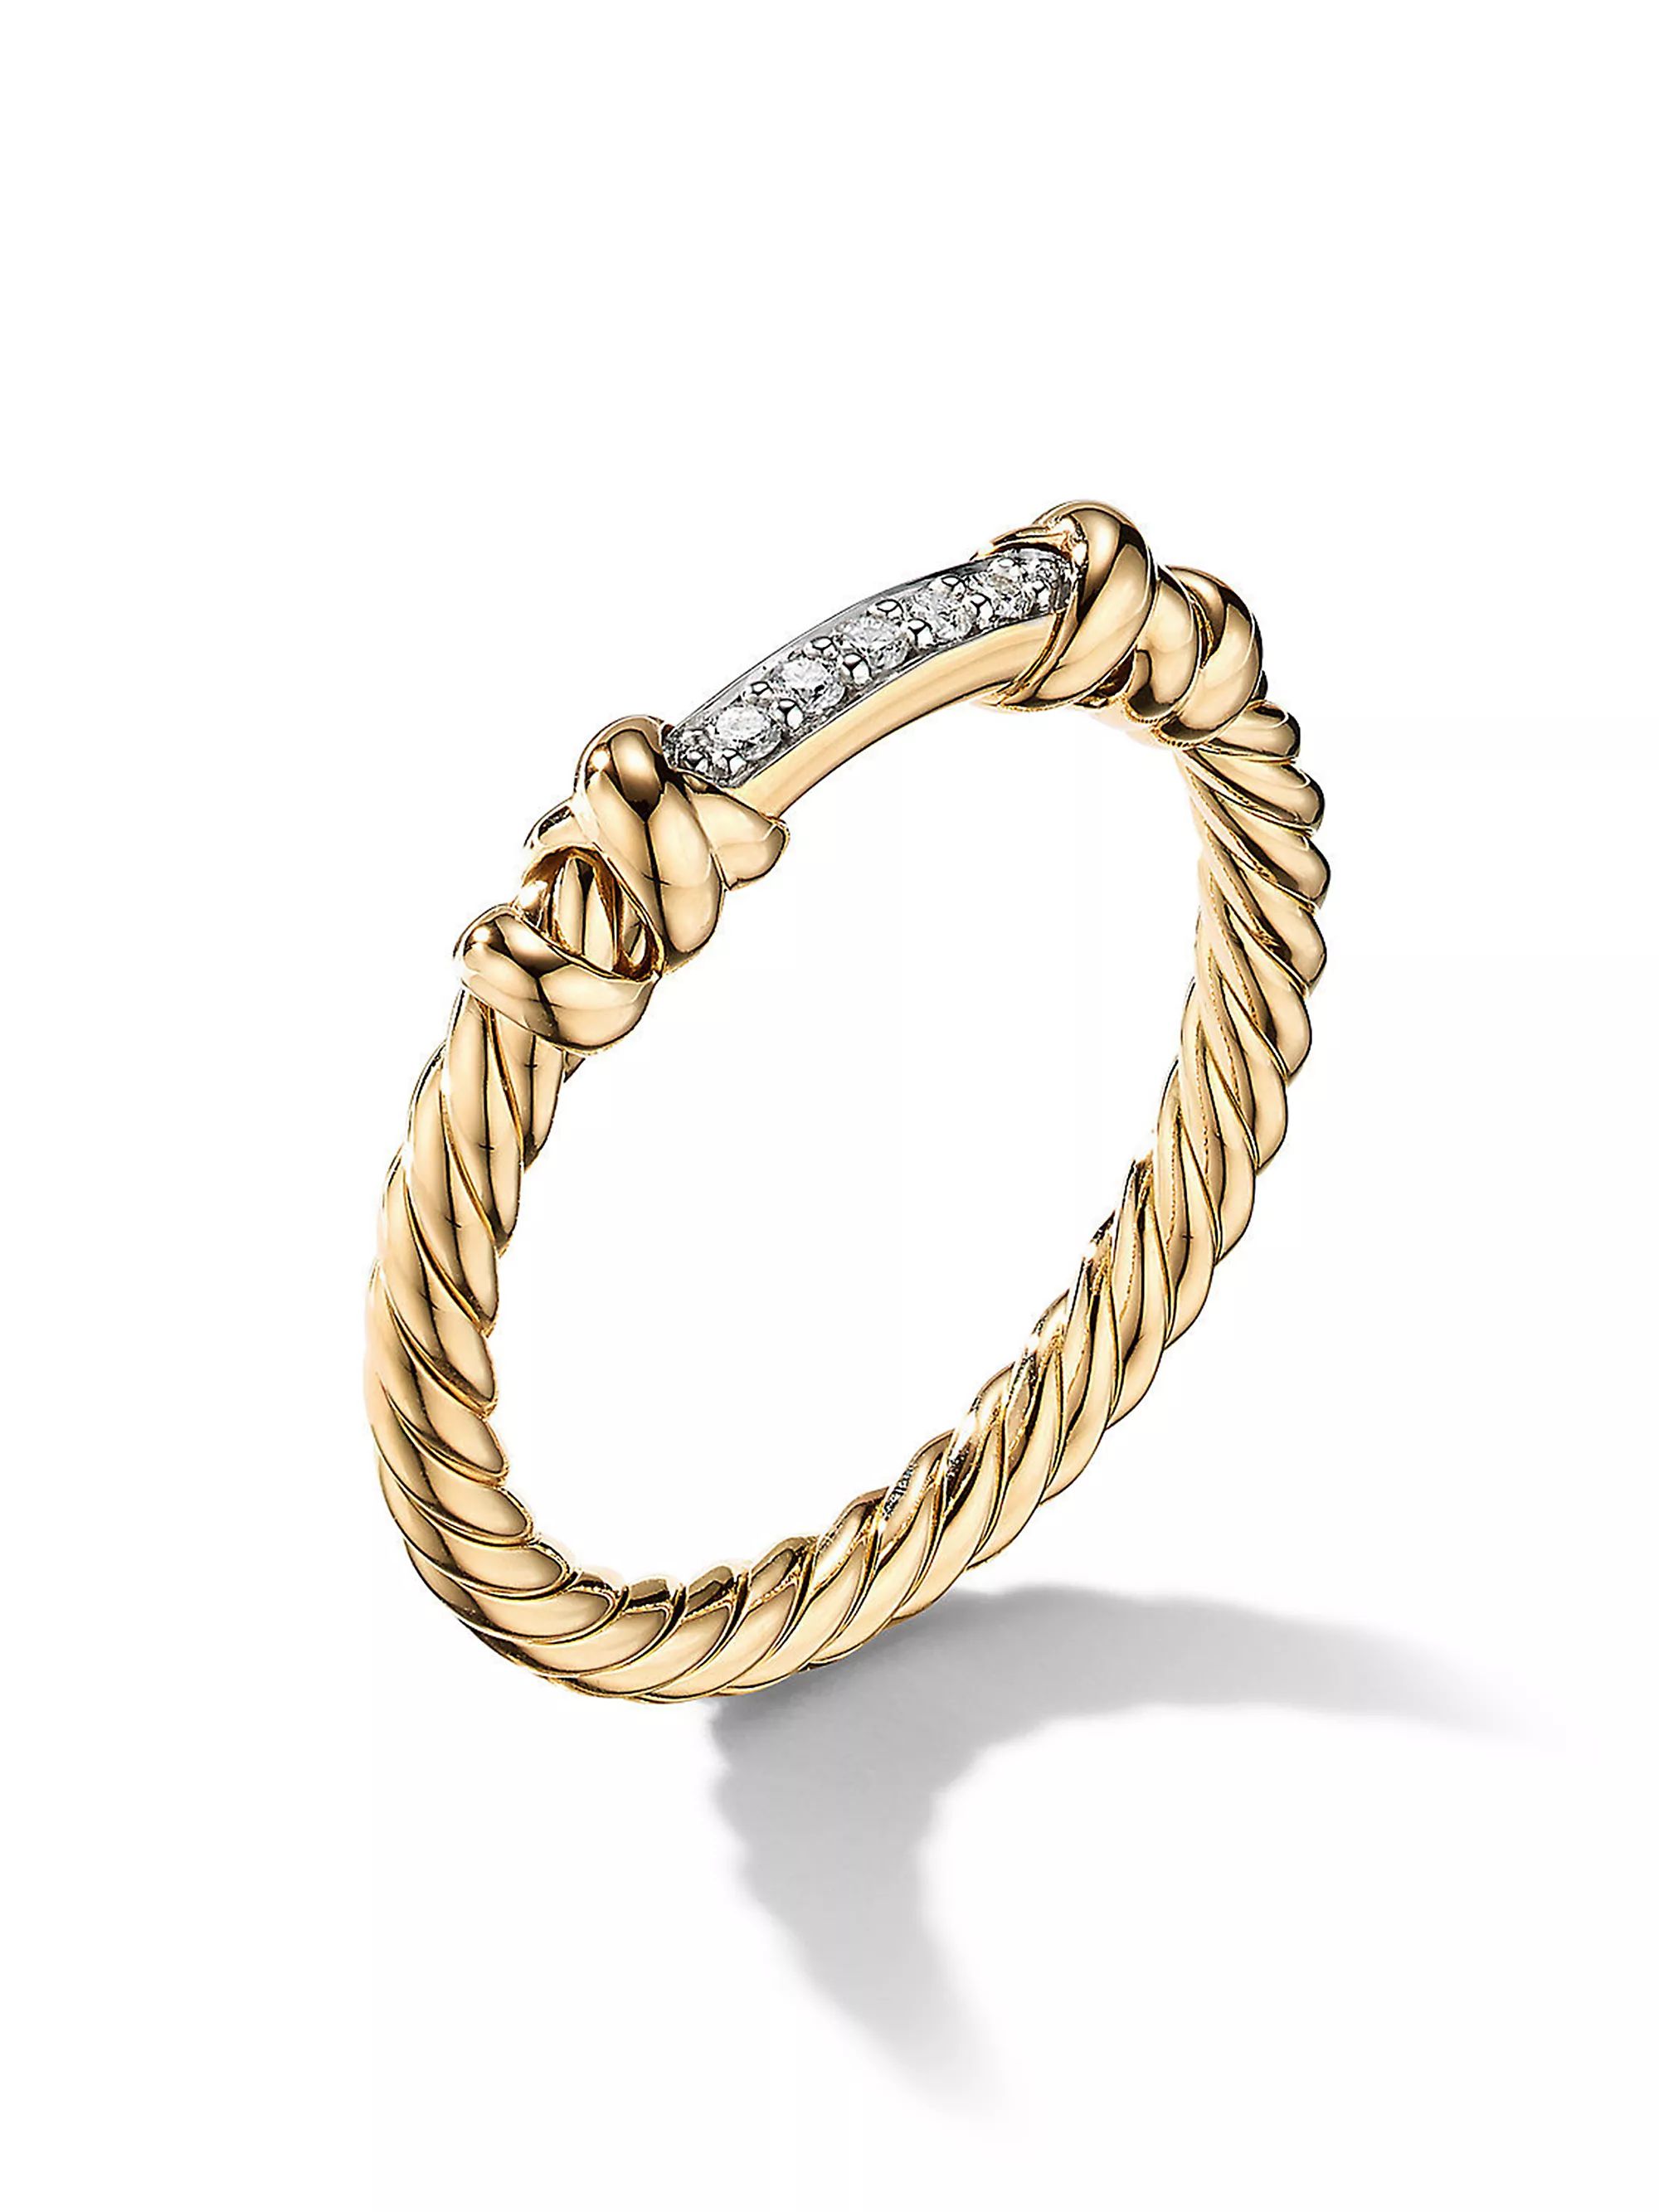 RingsBandsDavid YurmanPetite Helena Wrap Ring in 18K Yellow Gold with Pavé Diamonds$975 - $1,100 | Saks Fifth Avenue